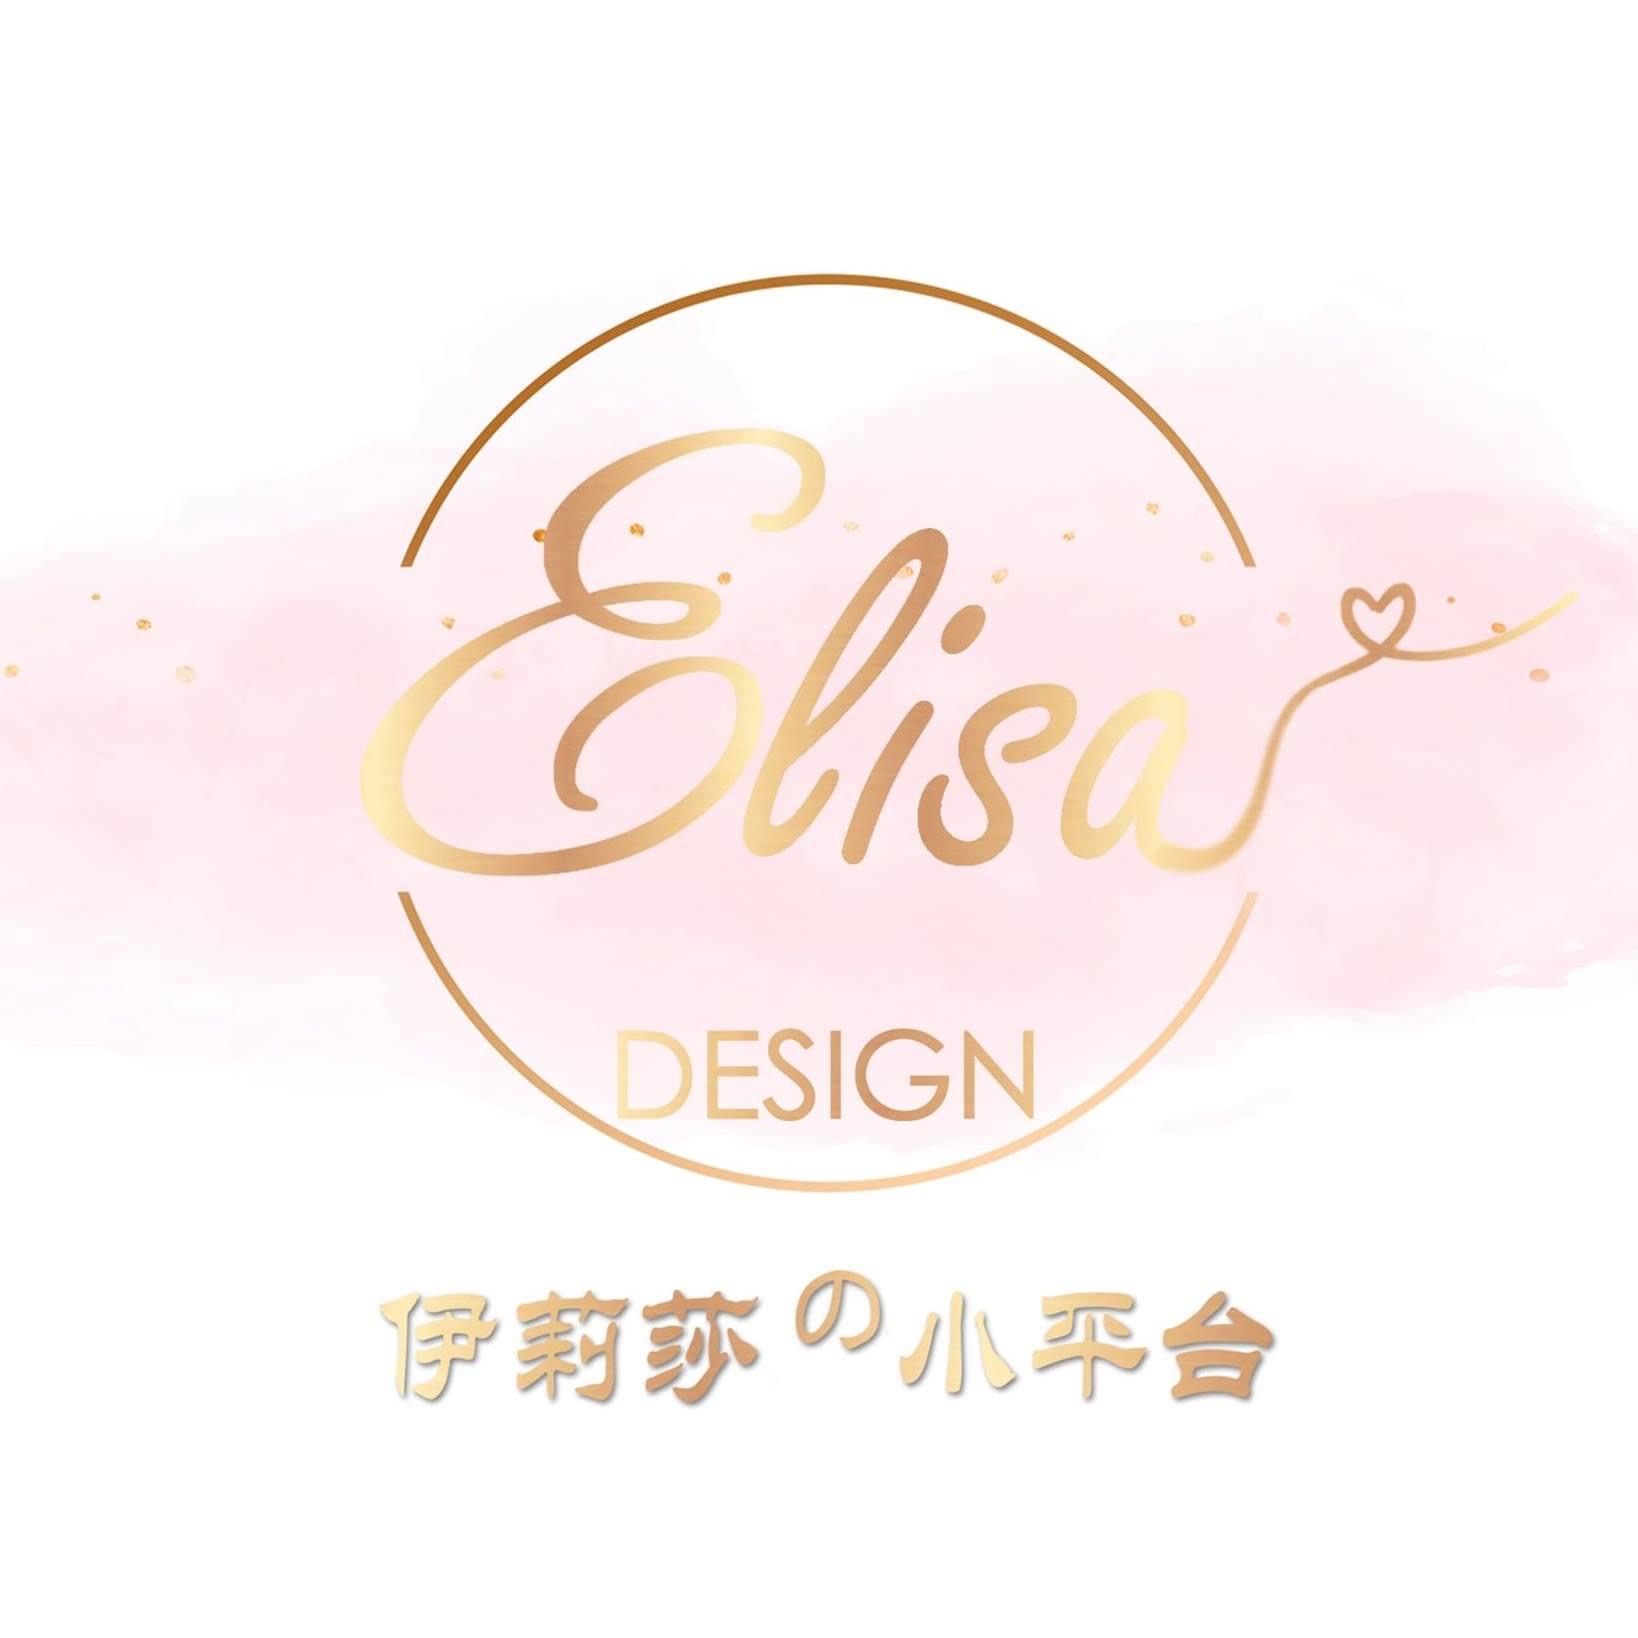 Elisa Design